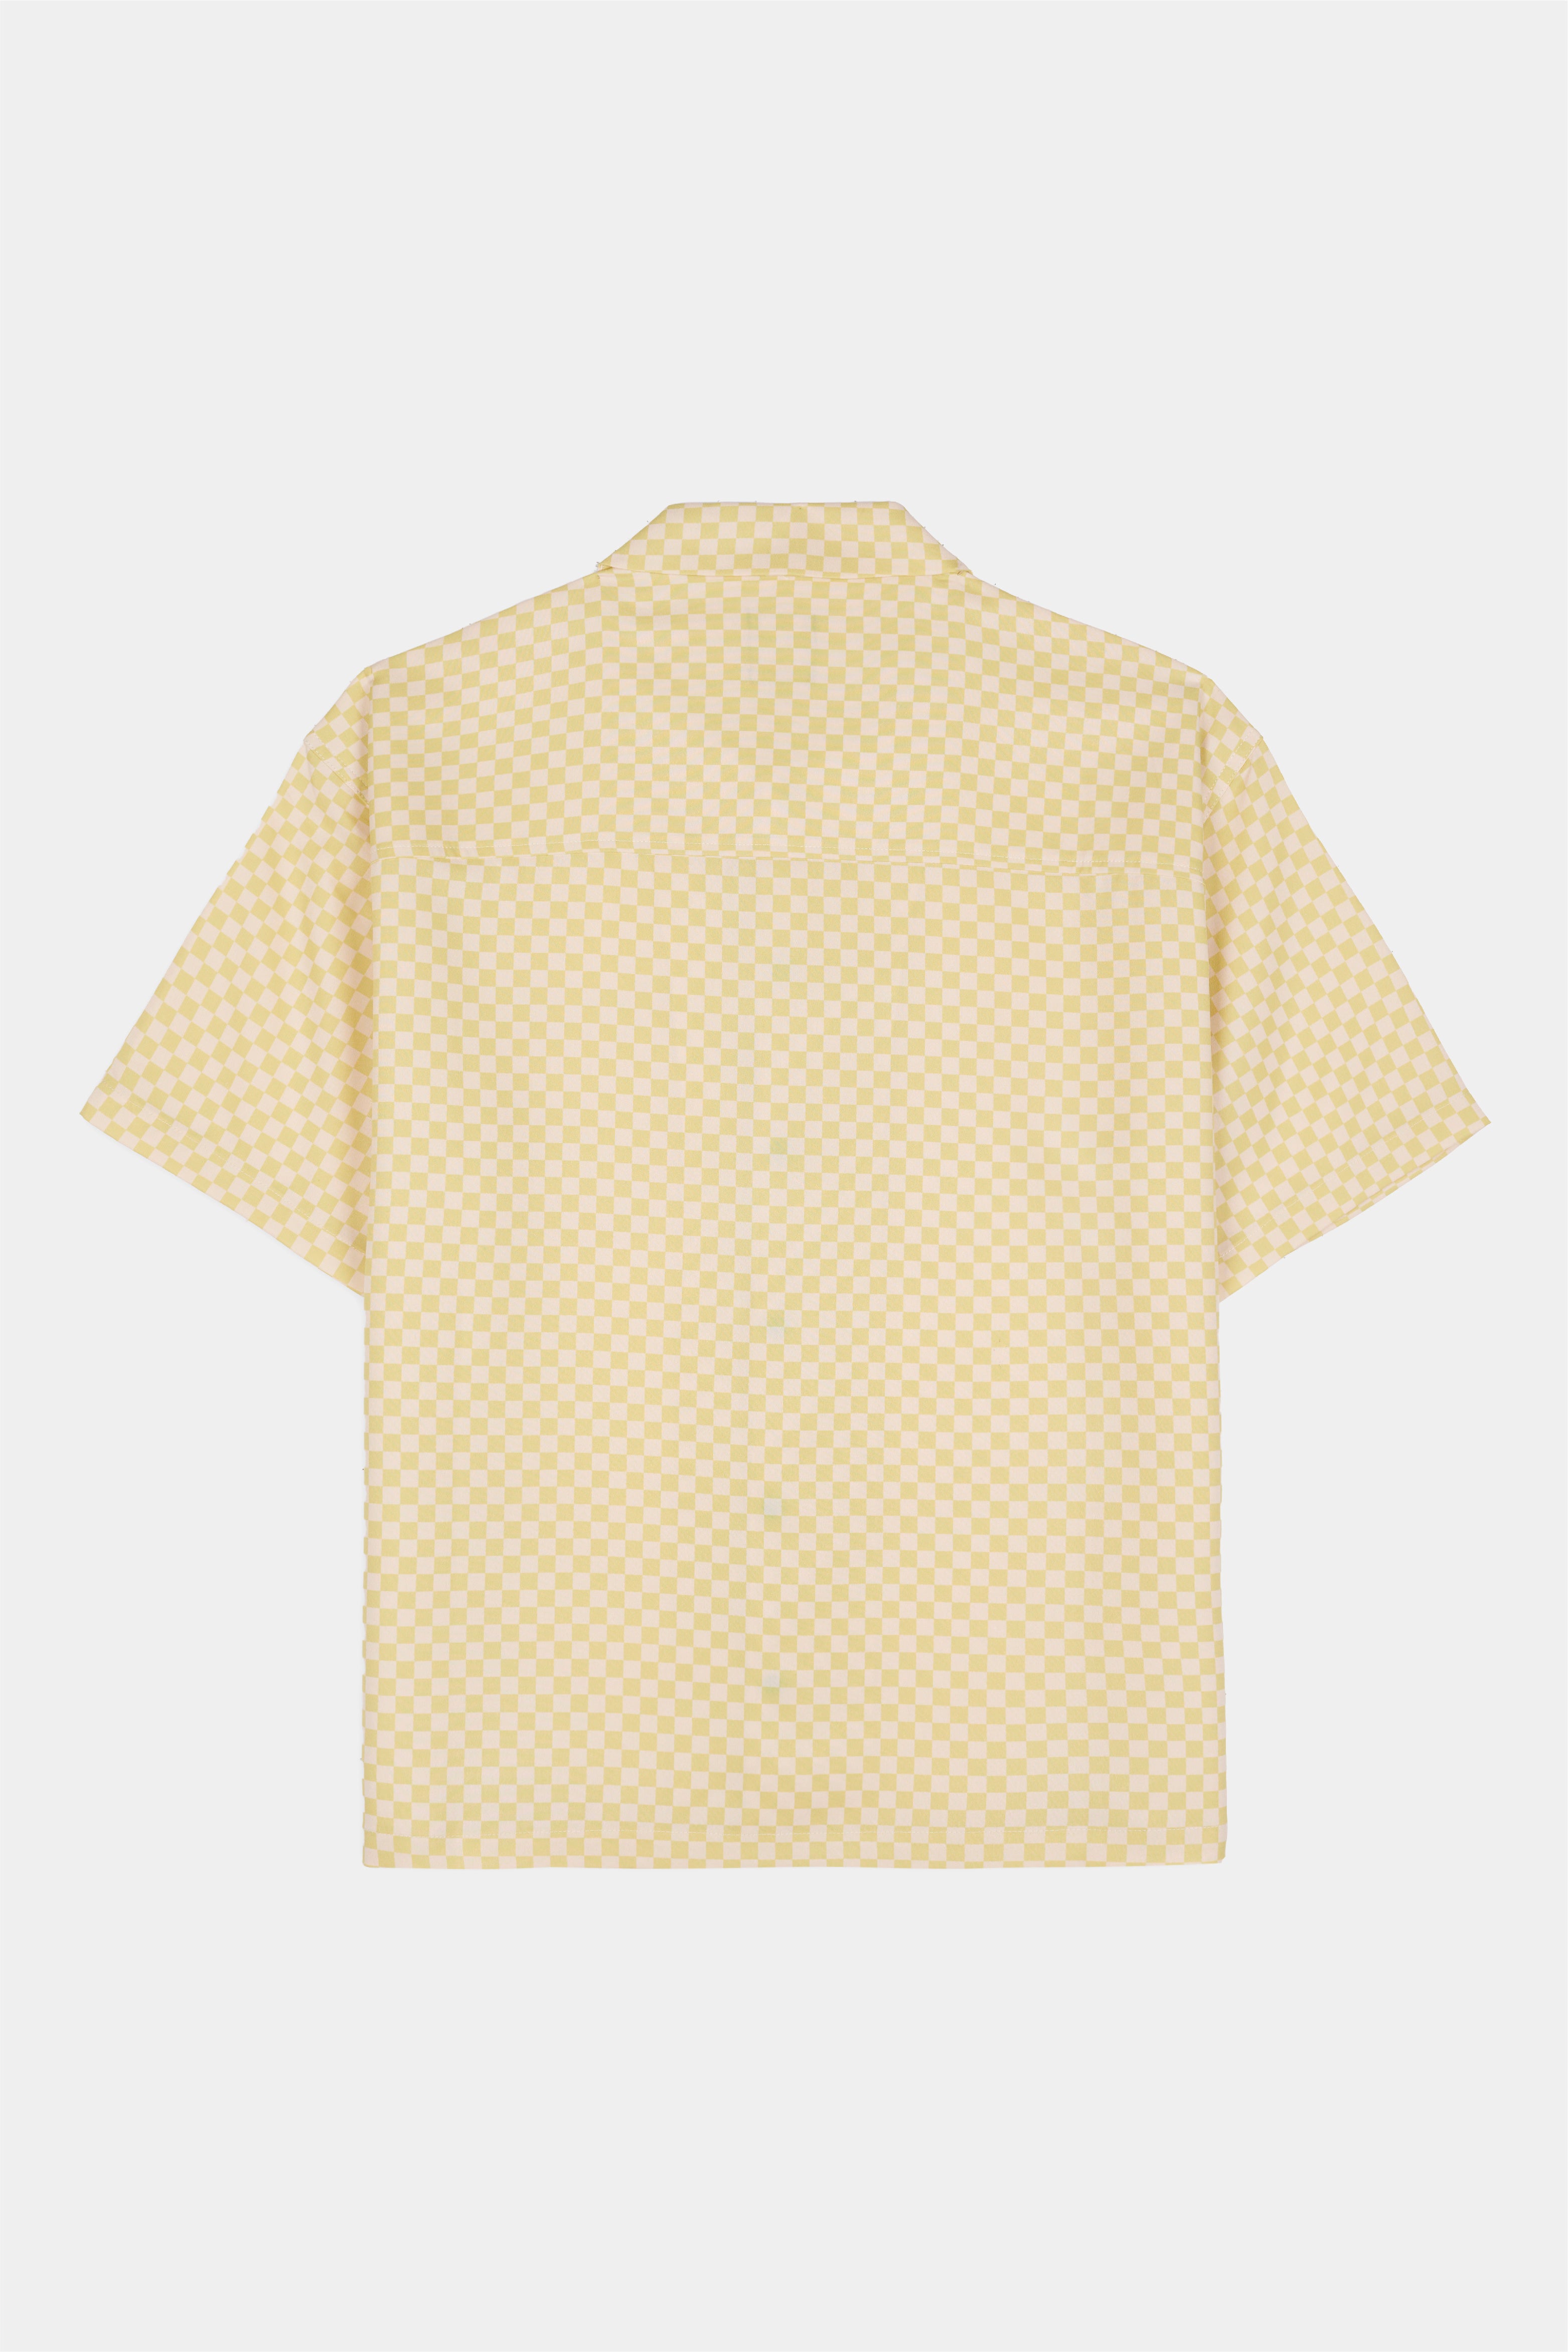 Selectshop FRAME - BRAIN DEAD Micro Check Snap Shirt Shirts Concept Store Dubai